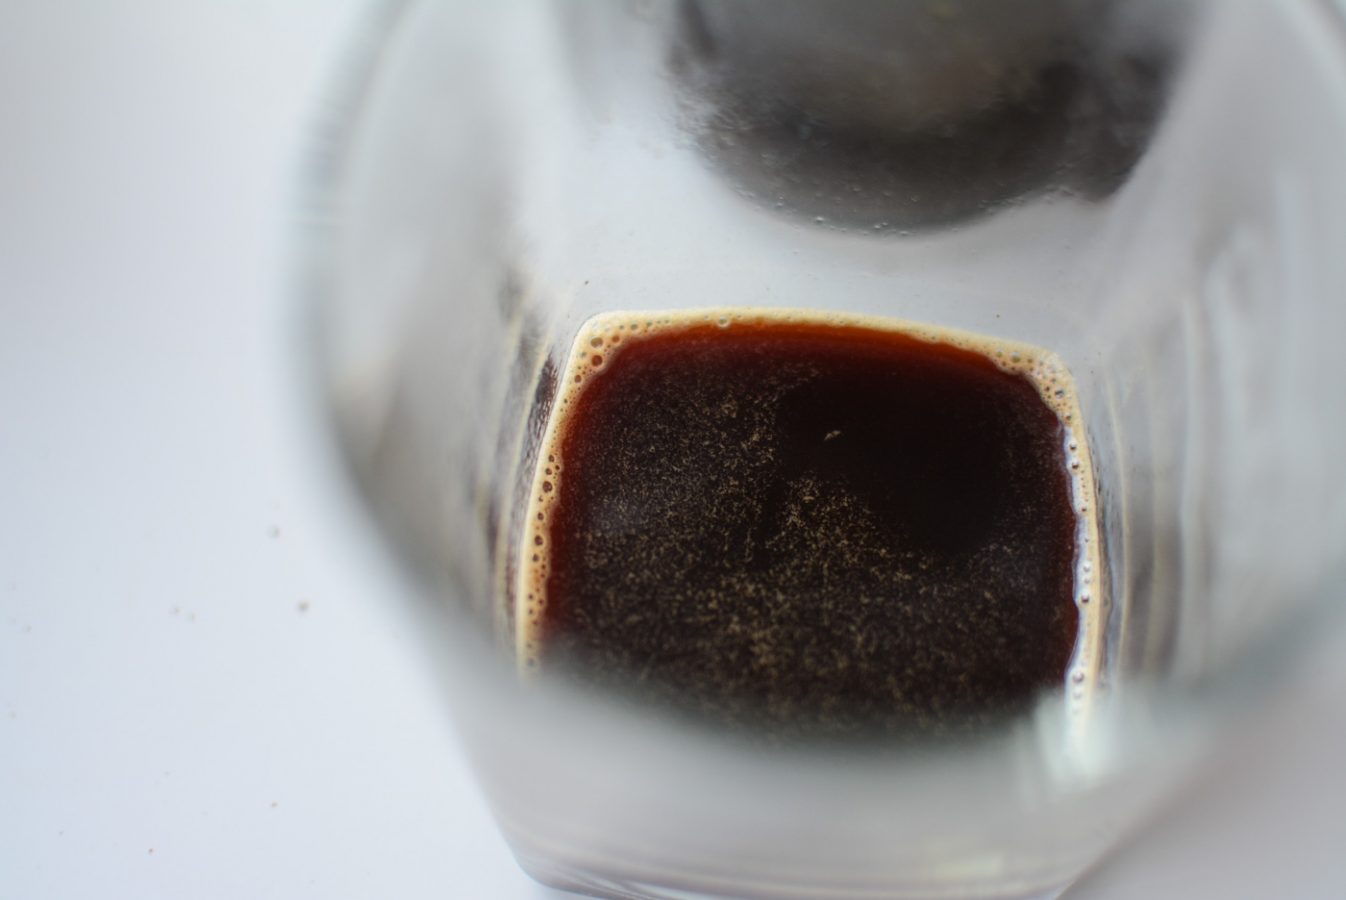 kawa - coffee plant - espresso - prismo - aeropress